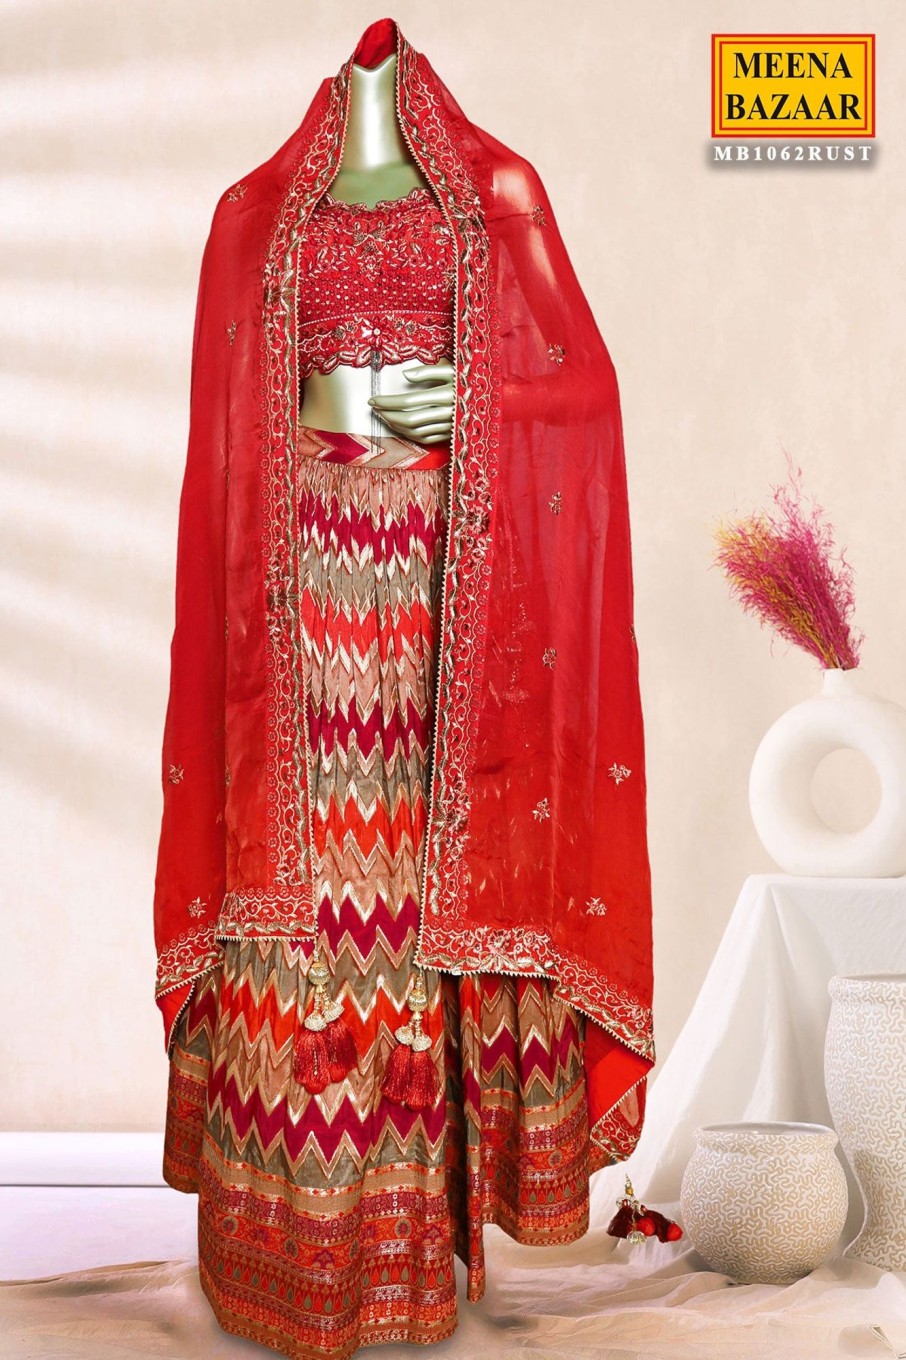 Meena Bazaar - Newly arrived Meena Bazaar's lehenga collections are here to  take over your celebratory wardrobe for the next soirée. #Mbzin #MeenaBazaar  #MbzExclusive #NewArrivals #LehengaforWomen #PrintedLehenga #WeddingOutfits  #IndianFashion ...